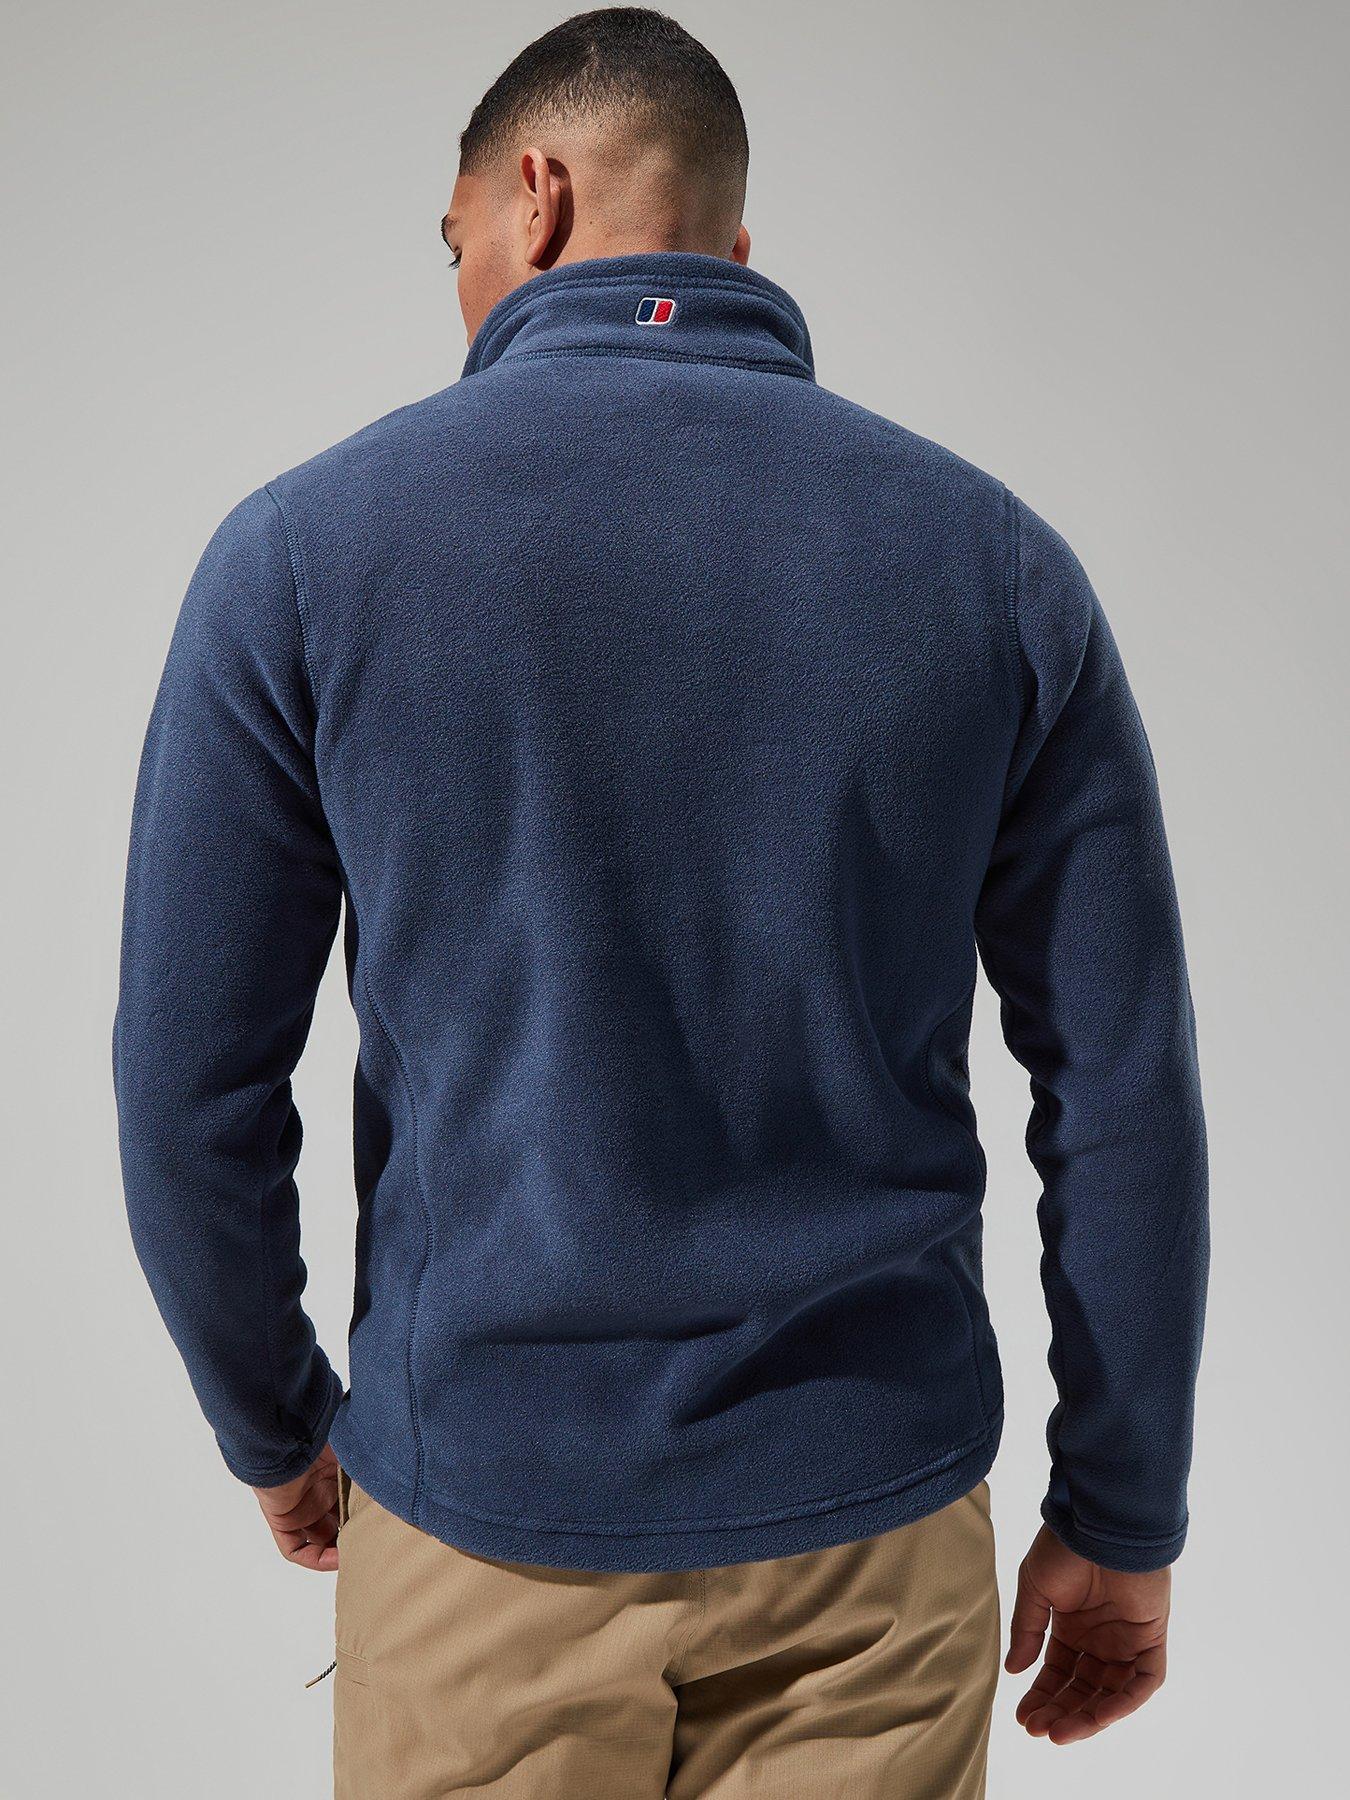 Men's sweatshirt Polartec® Classic Micro fleece 200 JULIAN for